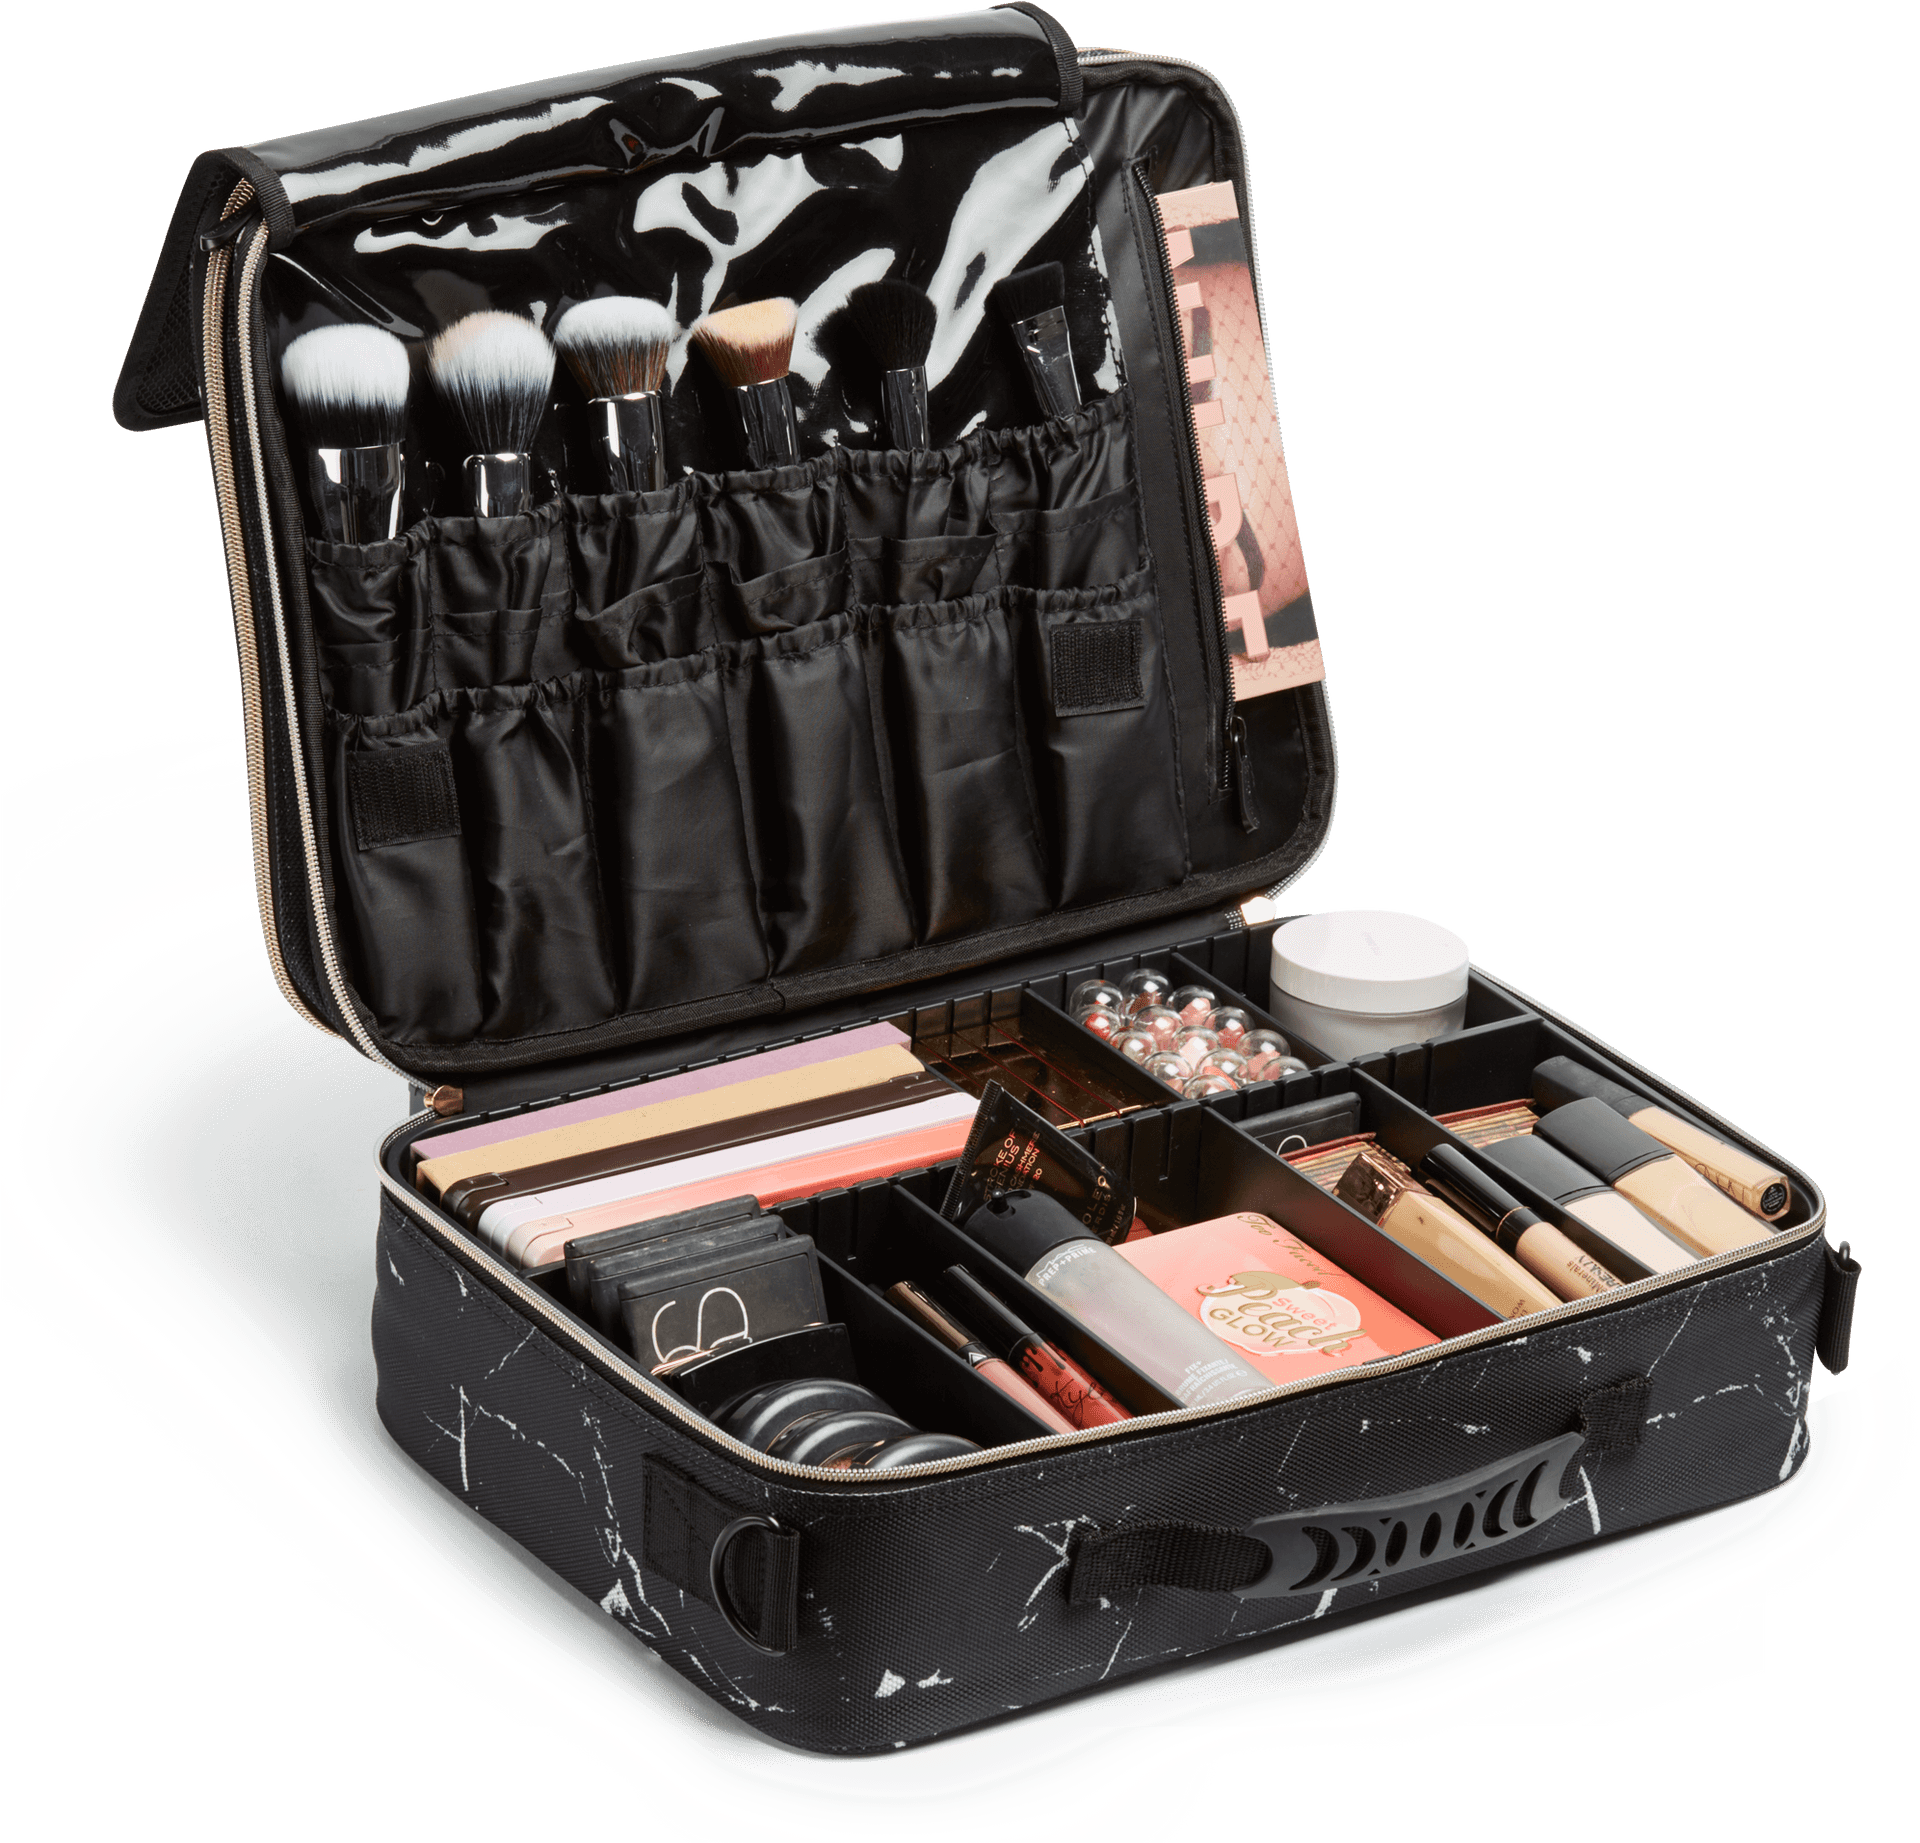 Professional Makeup Brush Setand Cosmetics Case PNG